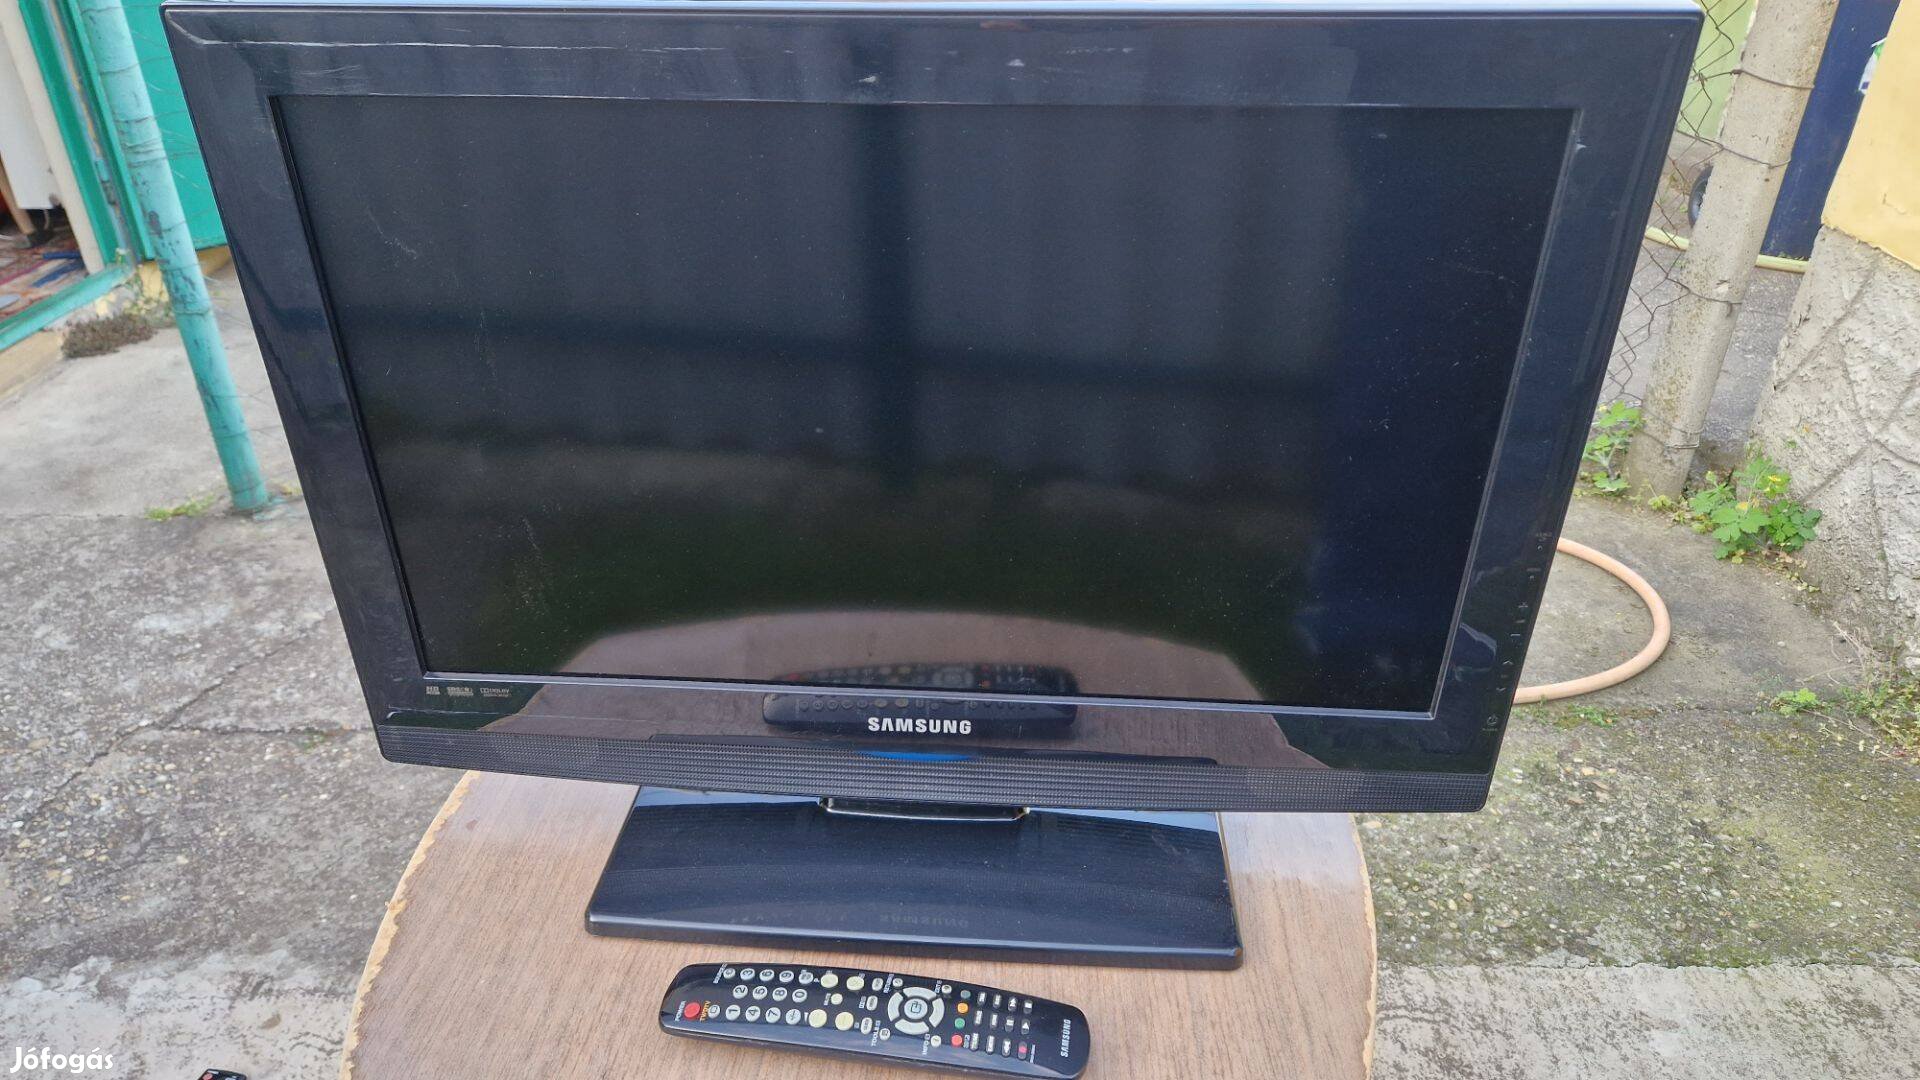 Eladó Samsung 65cm-es képátlójú lcd tv